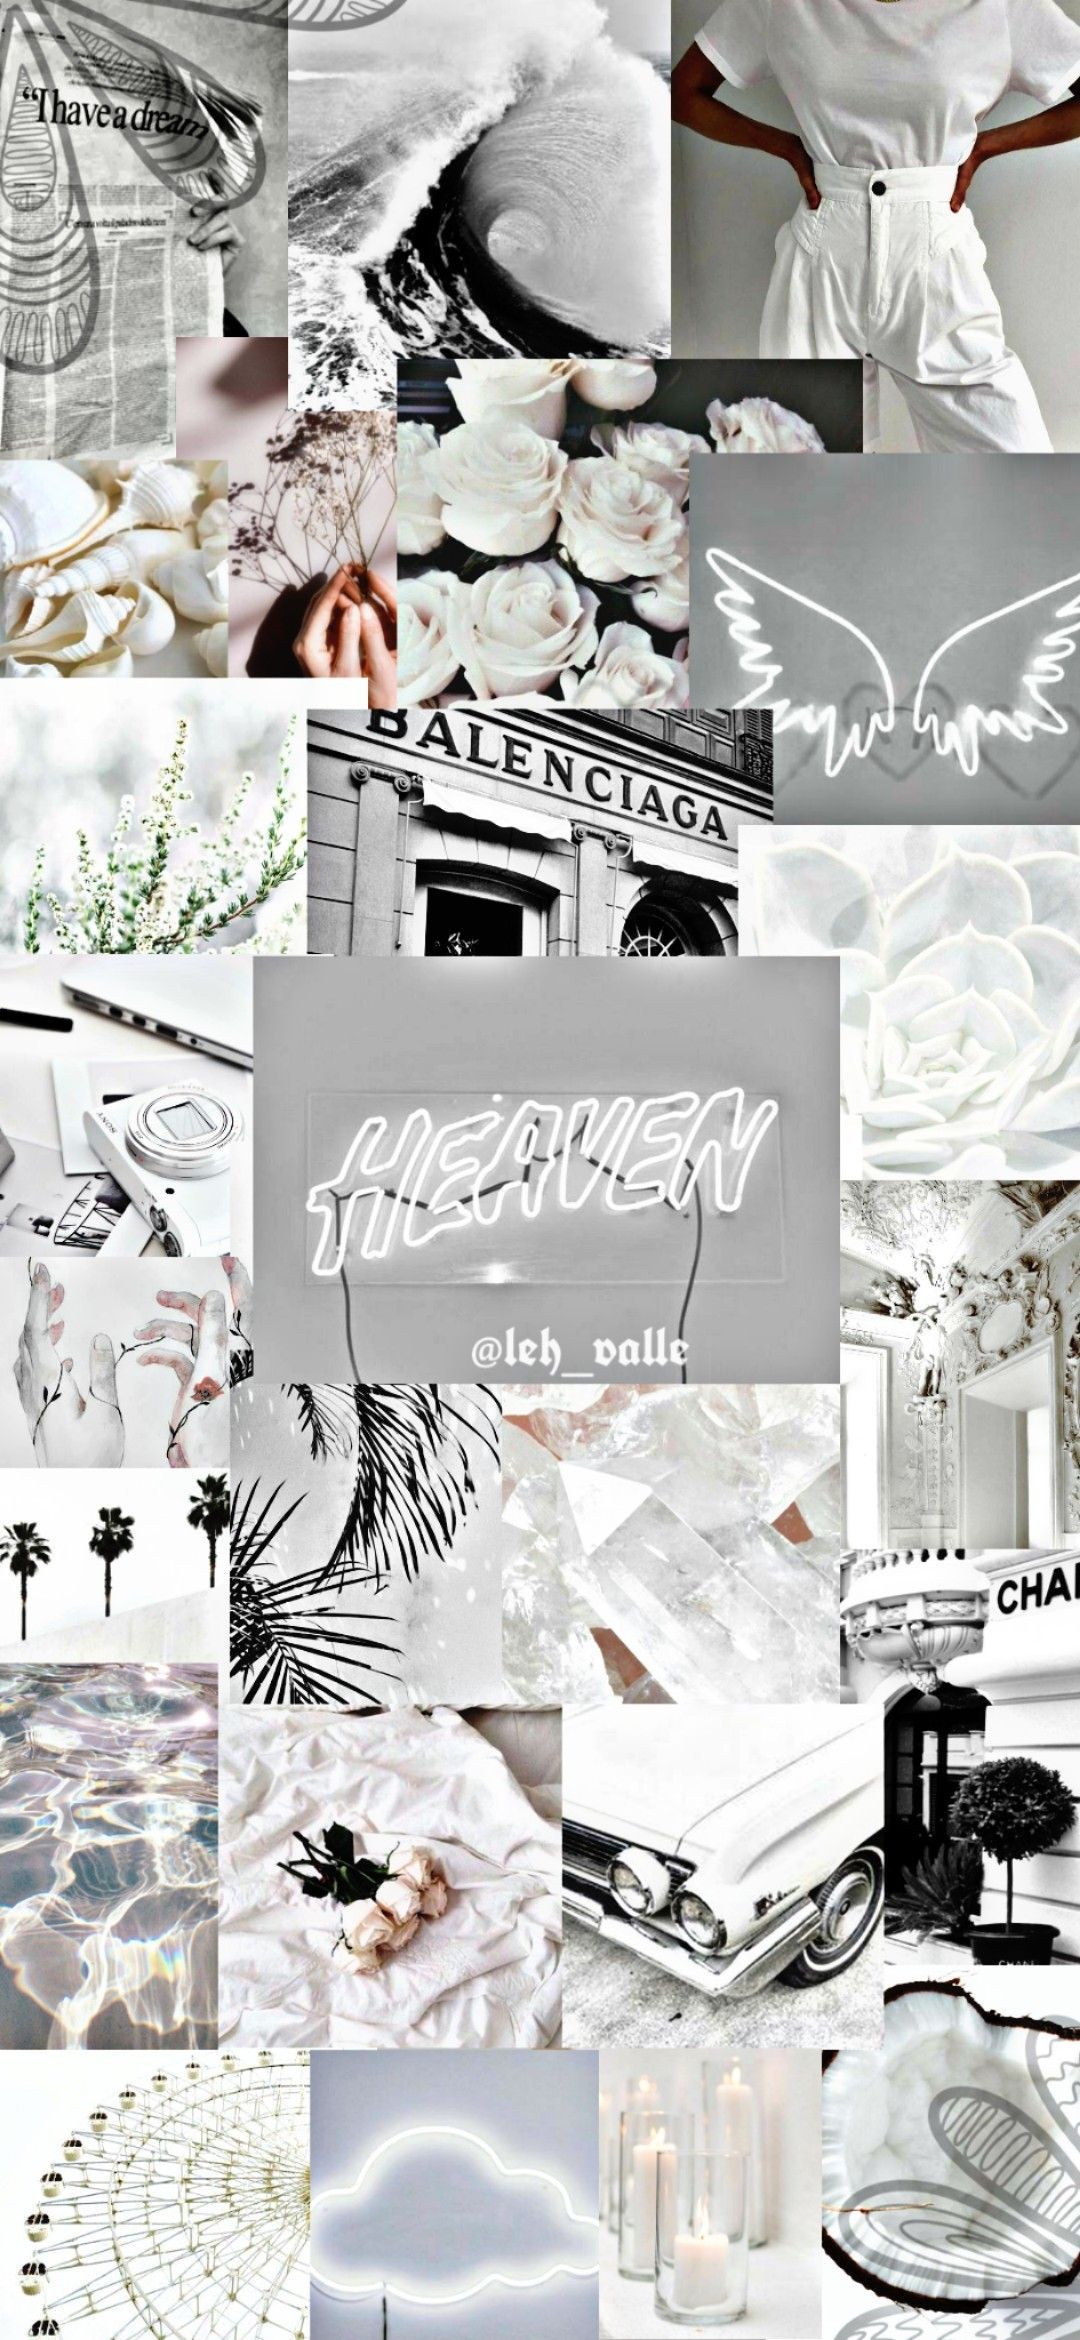 Walppeaper white. iPhone wallpaper tumblr aesthetic, Aesthetic iphone wallpaper, iPhone wallpaper vintage